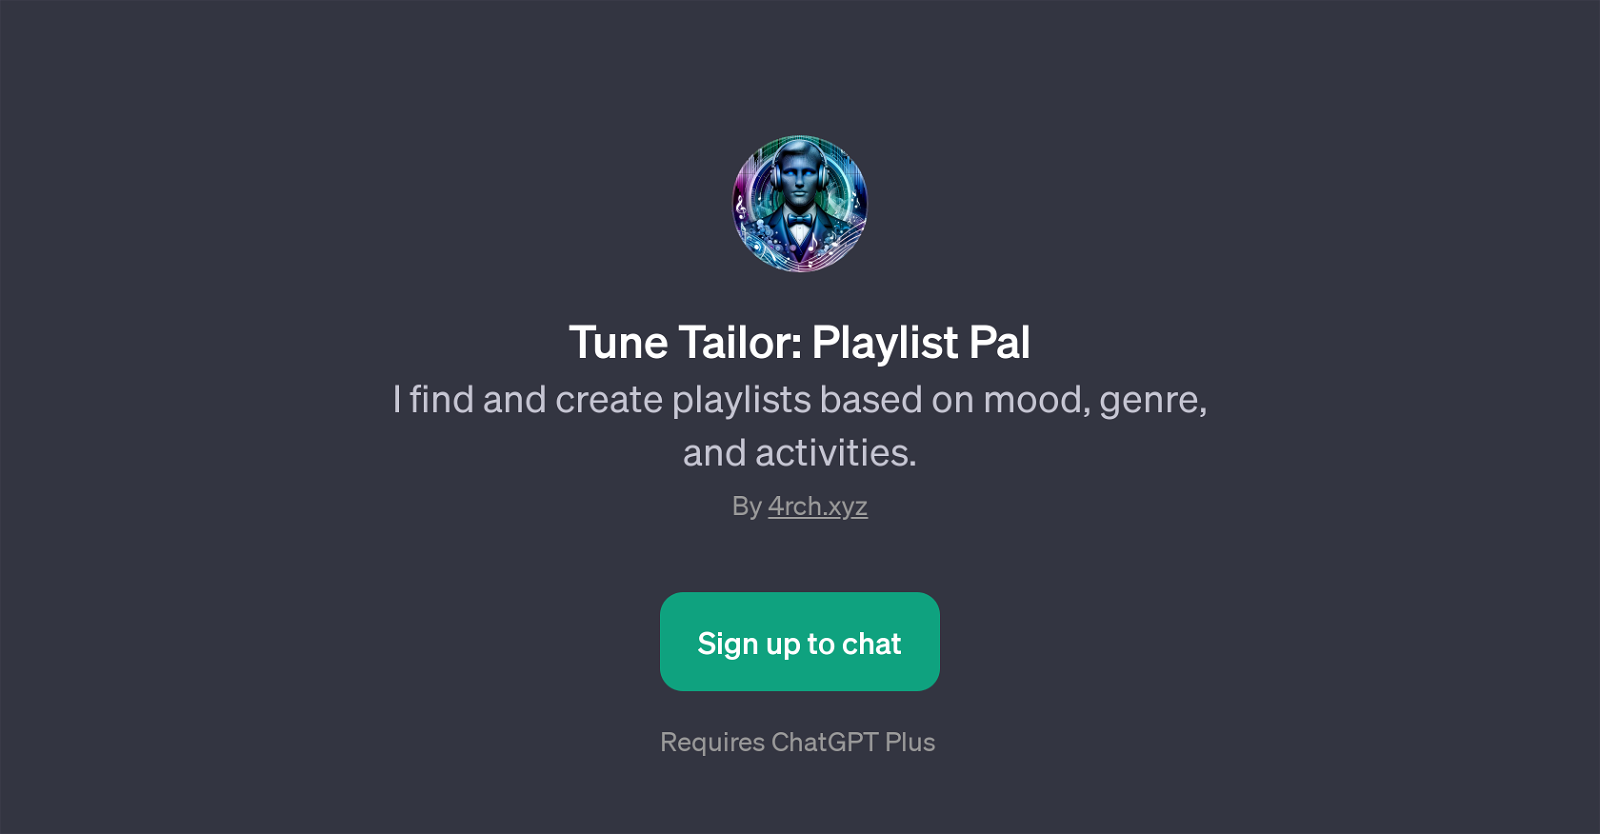 Tune Tailor: Playlist Pal website